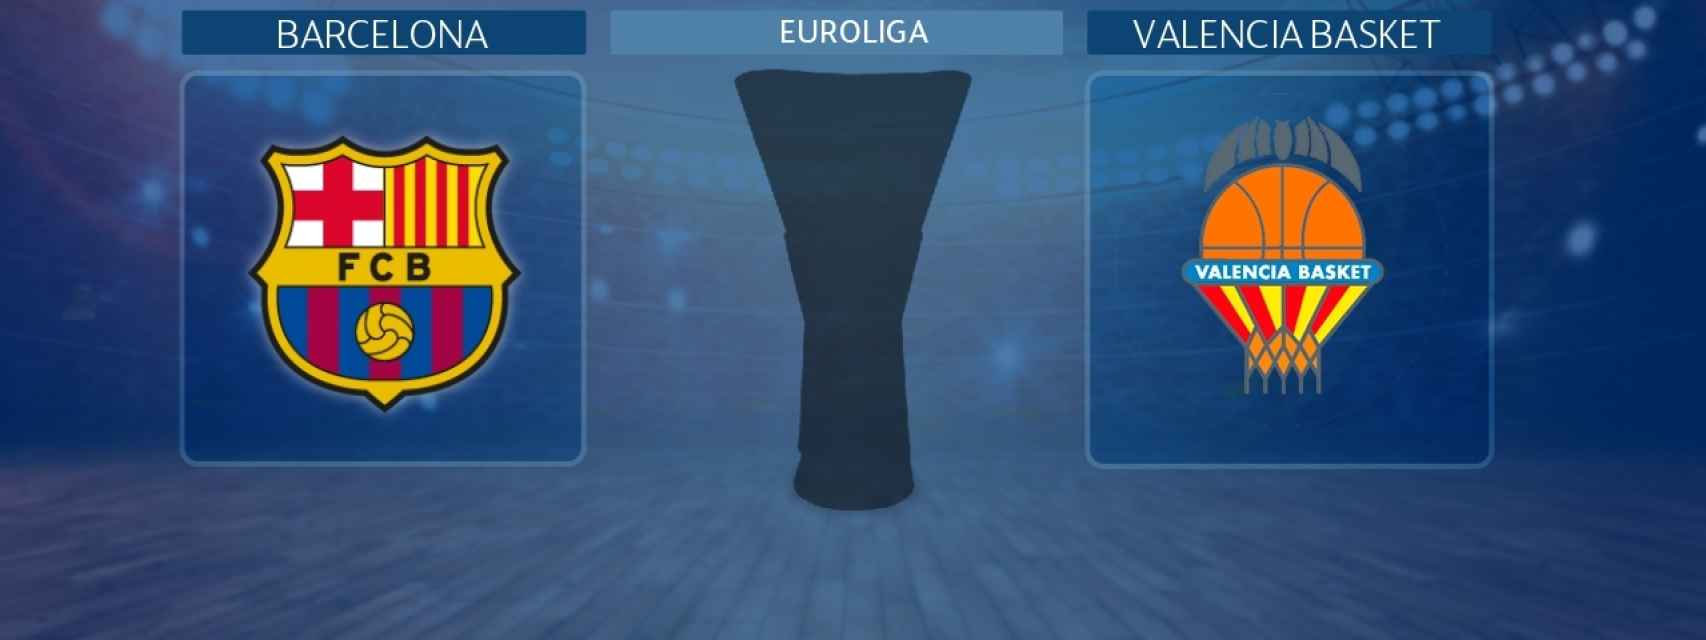 Barcelona - Valencia Basket